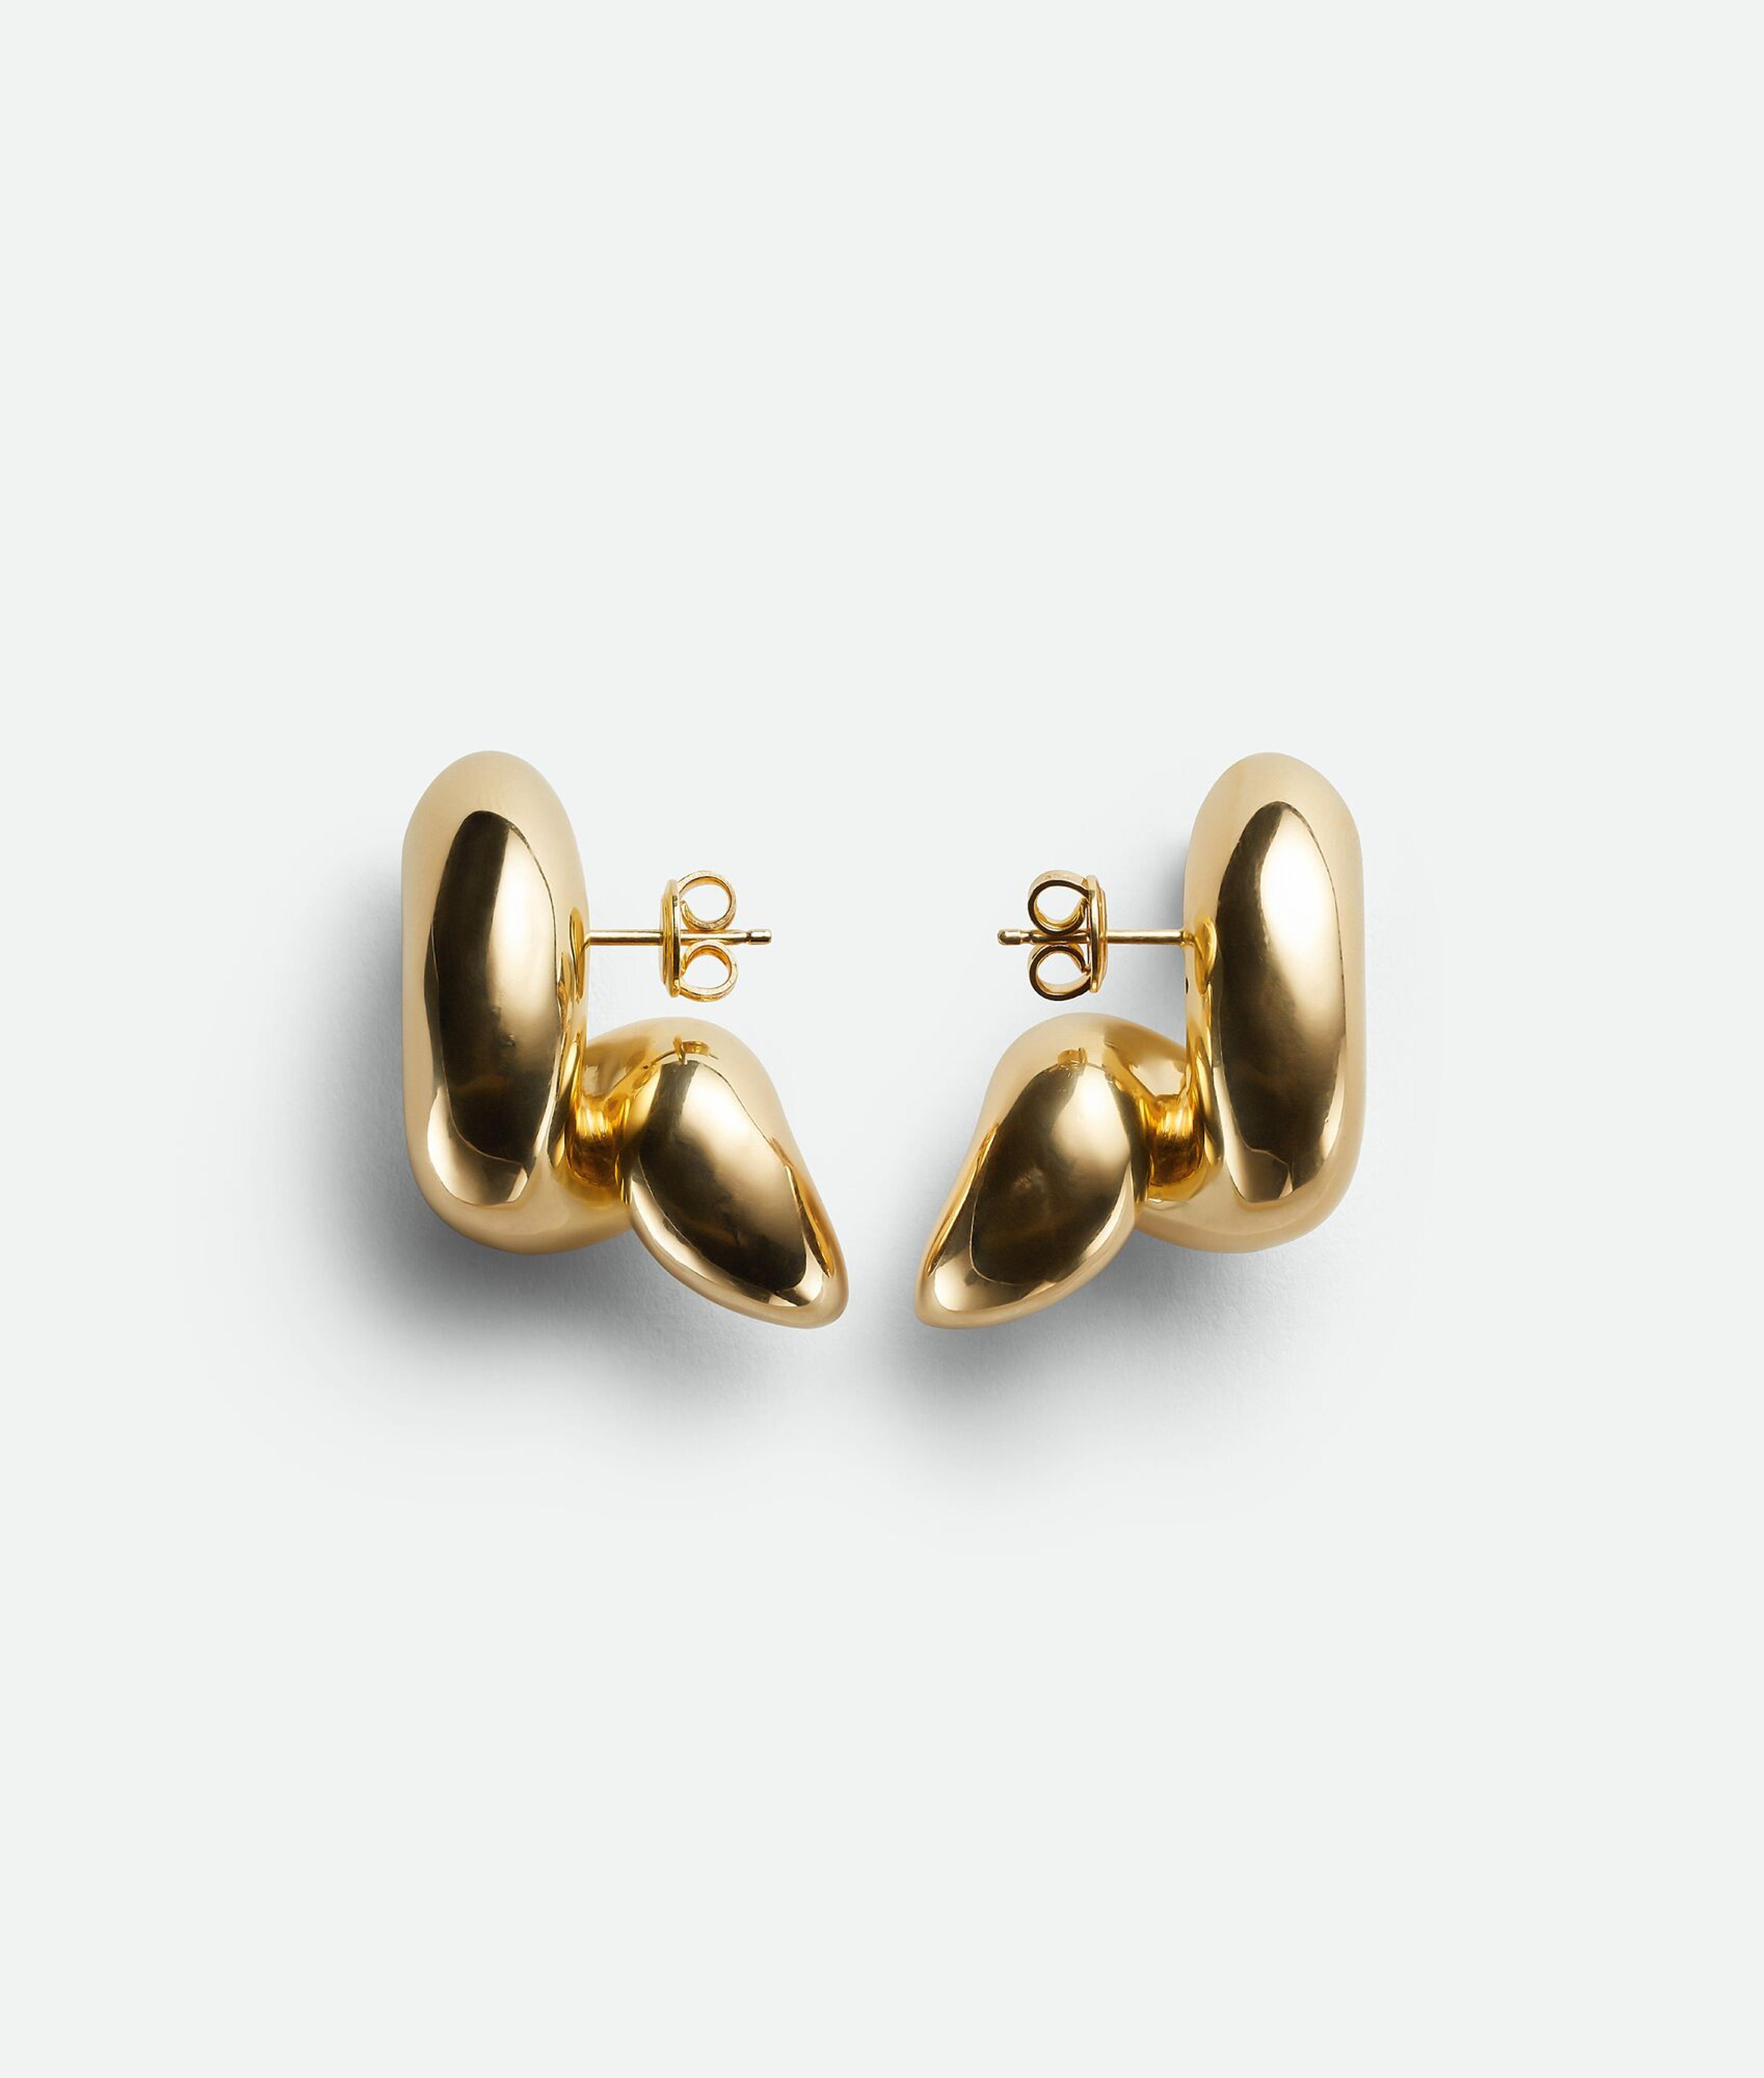 Bottega Veneta® Women's Corkscrew Earrings in Yellow Gold. Shop online now.